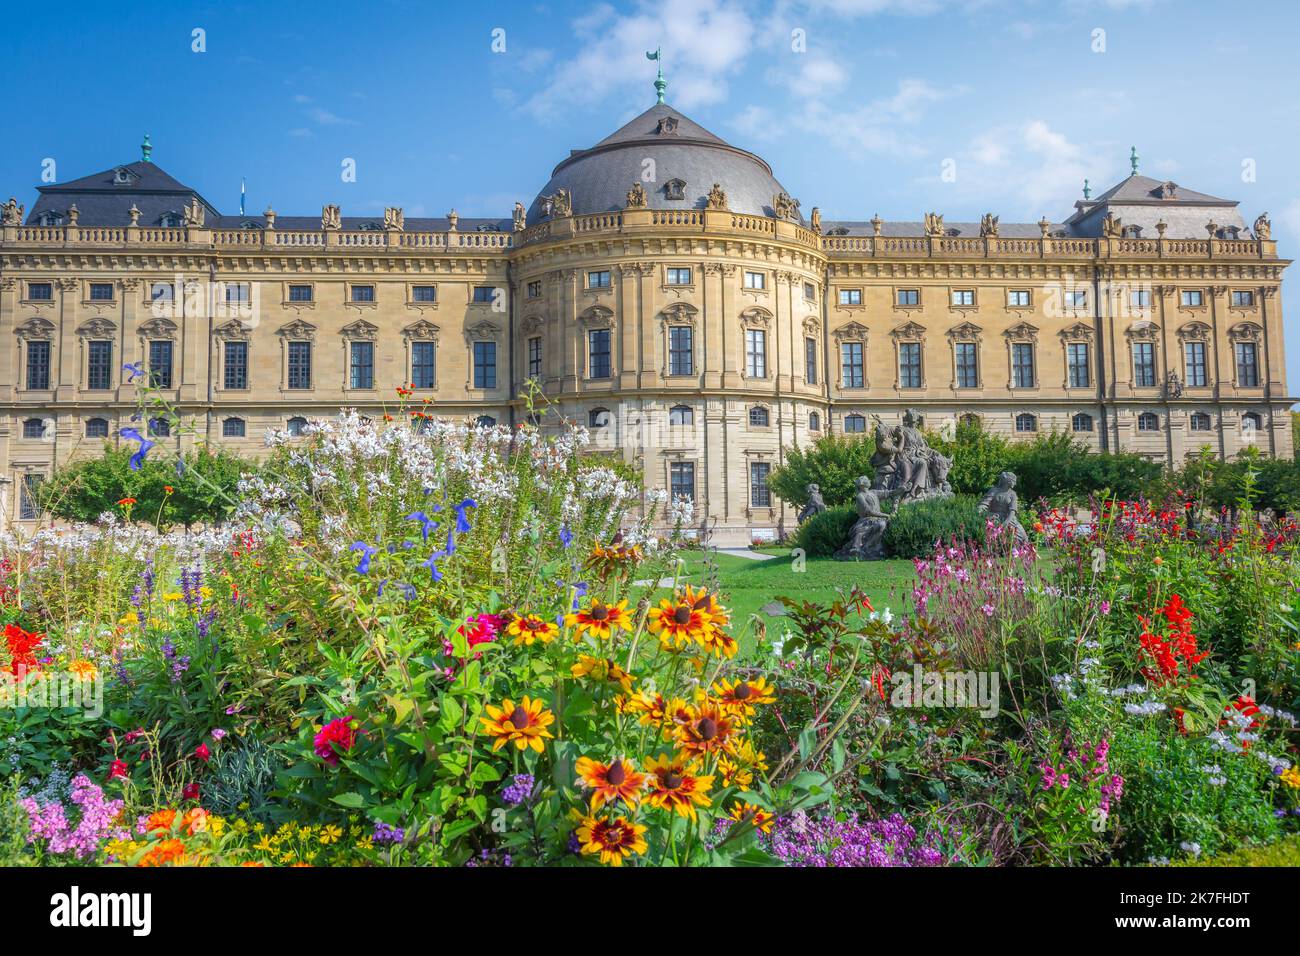 Wurzburg baroque Residence and gardens at springtime, Wurzburg, Germany Stock Photo